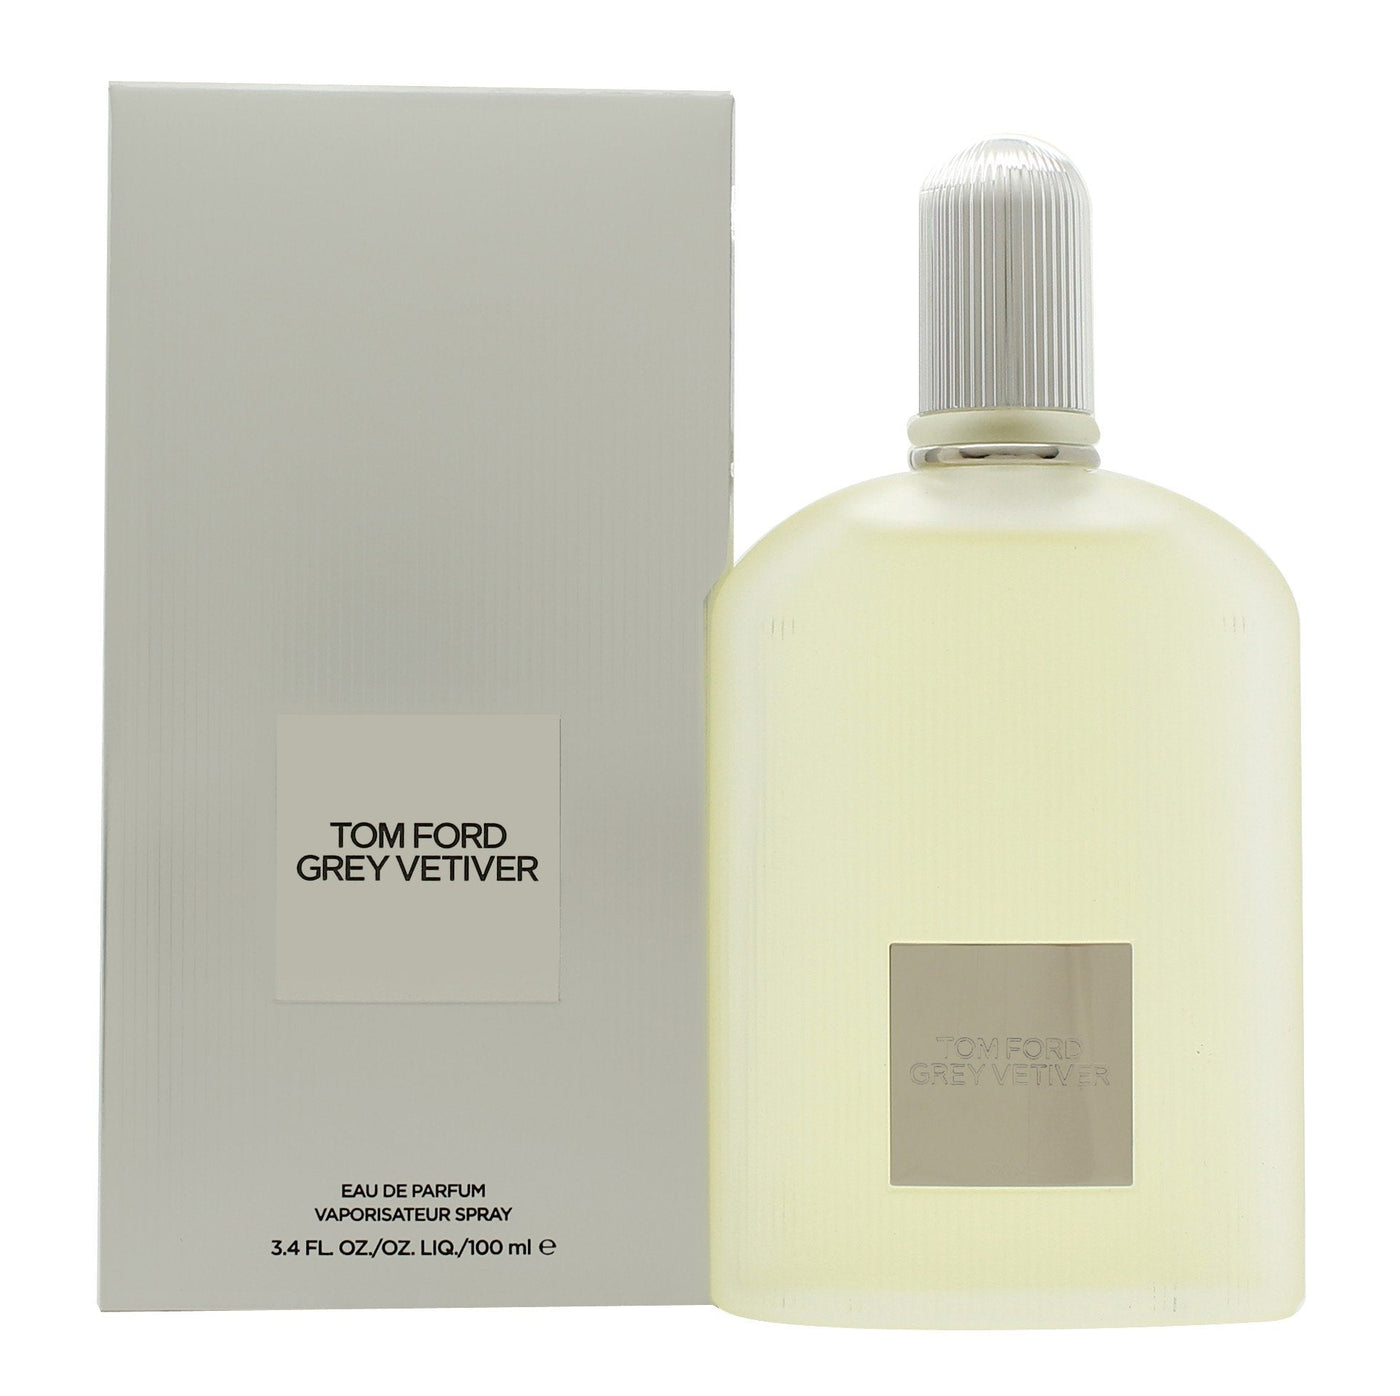 Grey Vetiver by Tom Ford Eau De Parfum 100ml Retail Pack